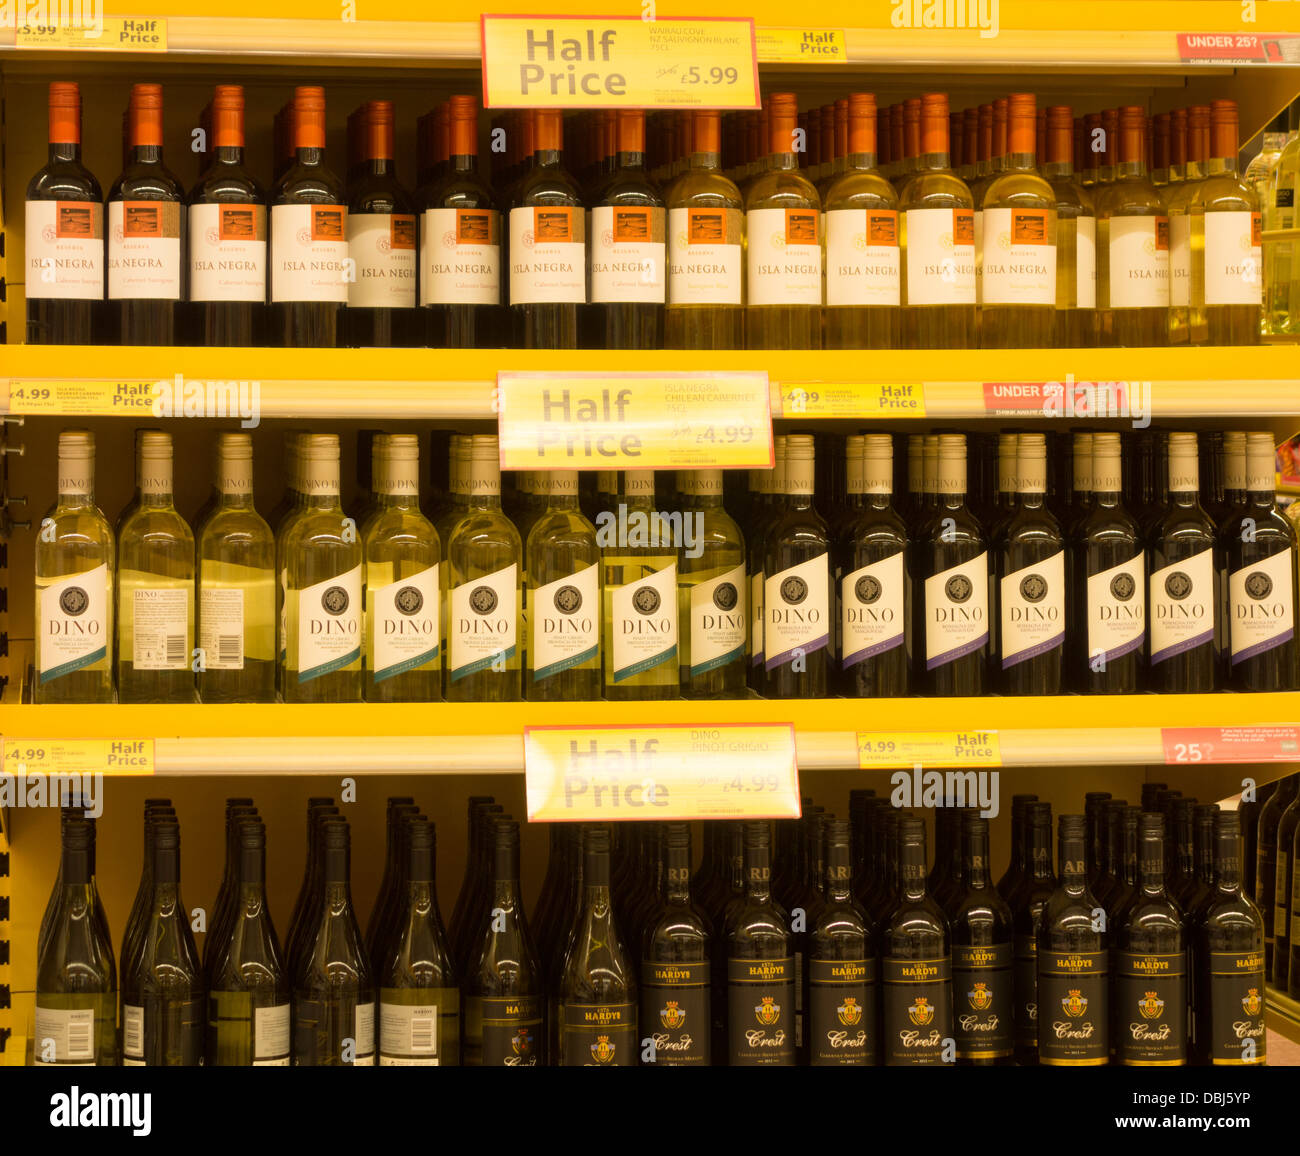 Half price wine in Tesco supermarket Stock Photo